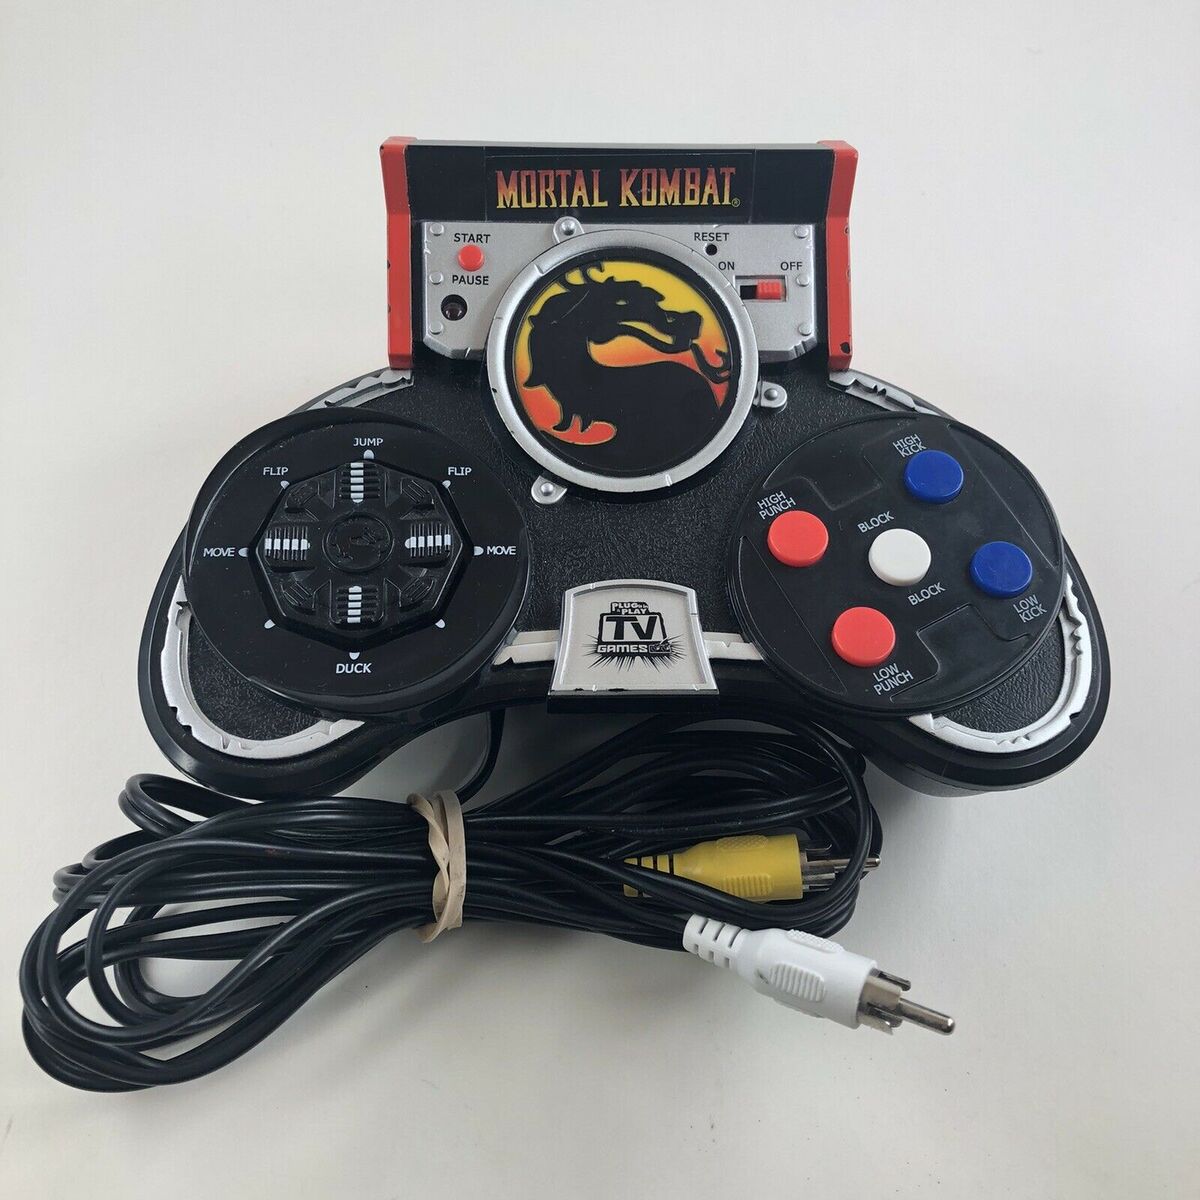 Tiger Electronics Midway Mortal Kombat Handheld Game 1992 for sale online